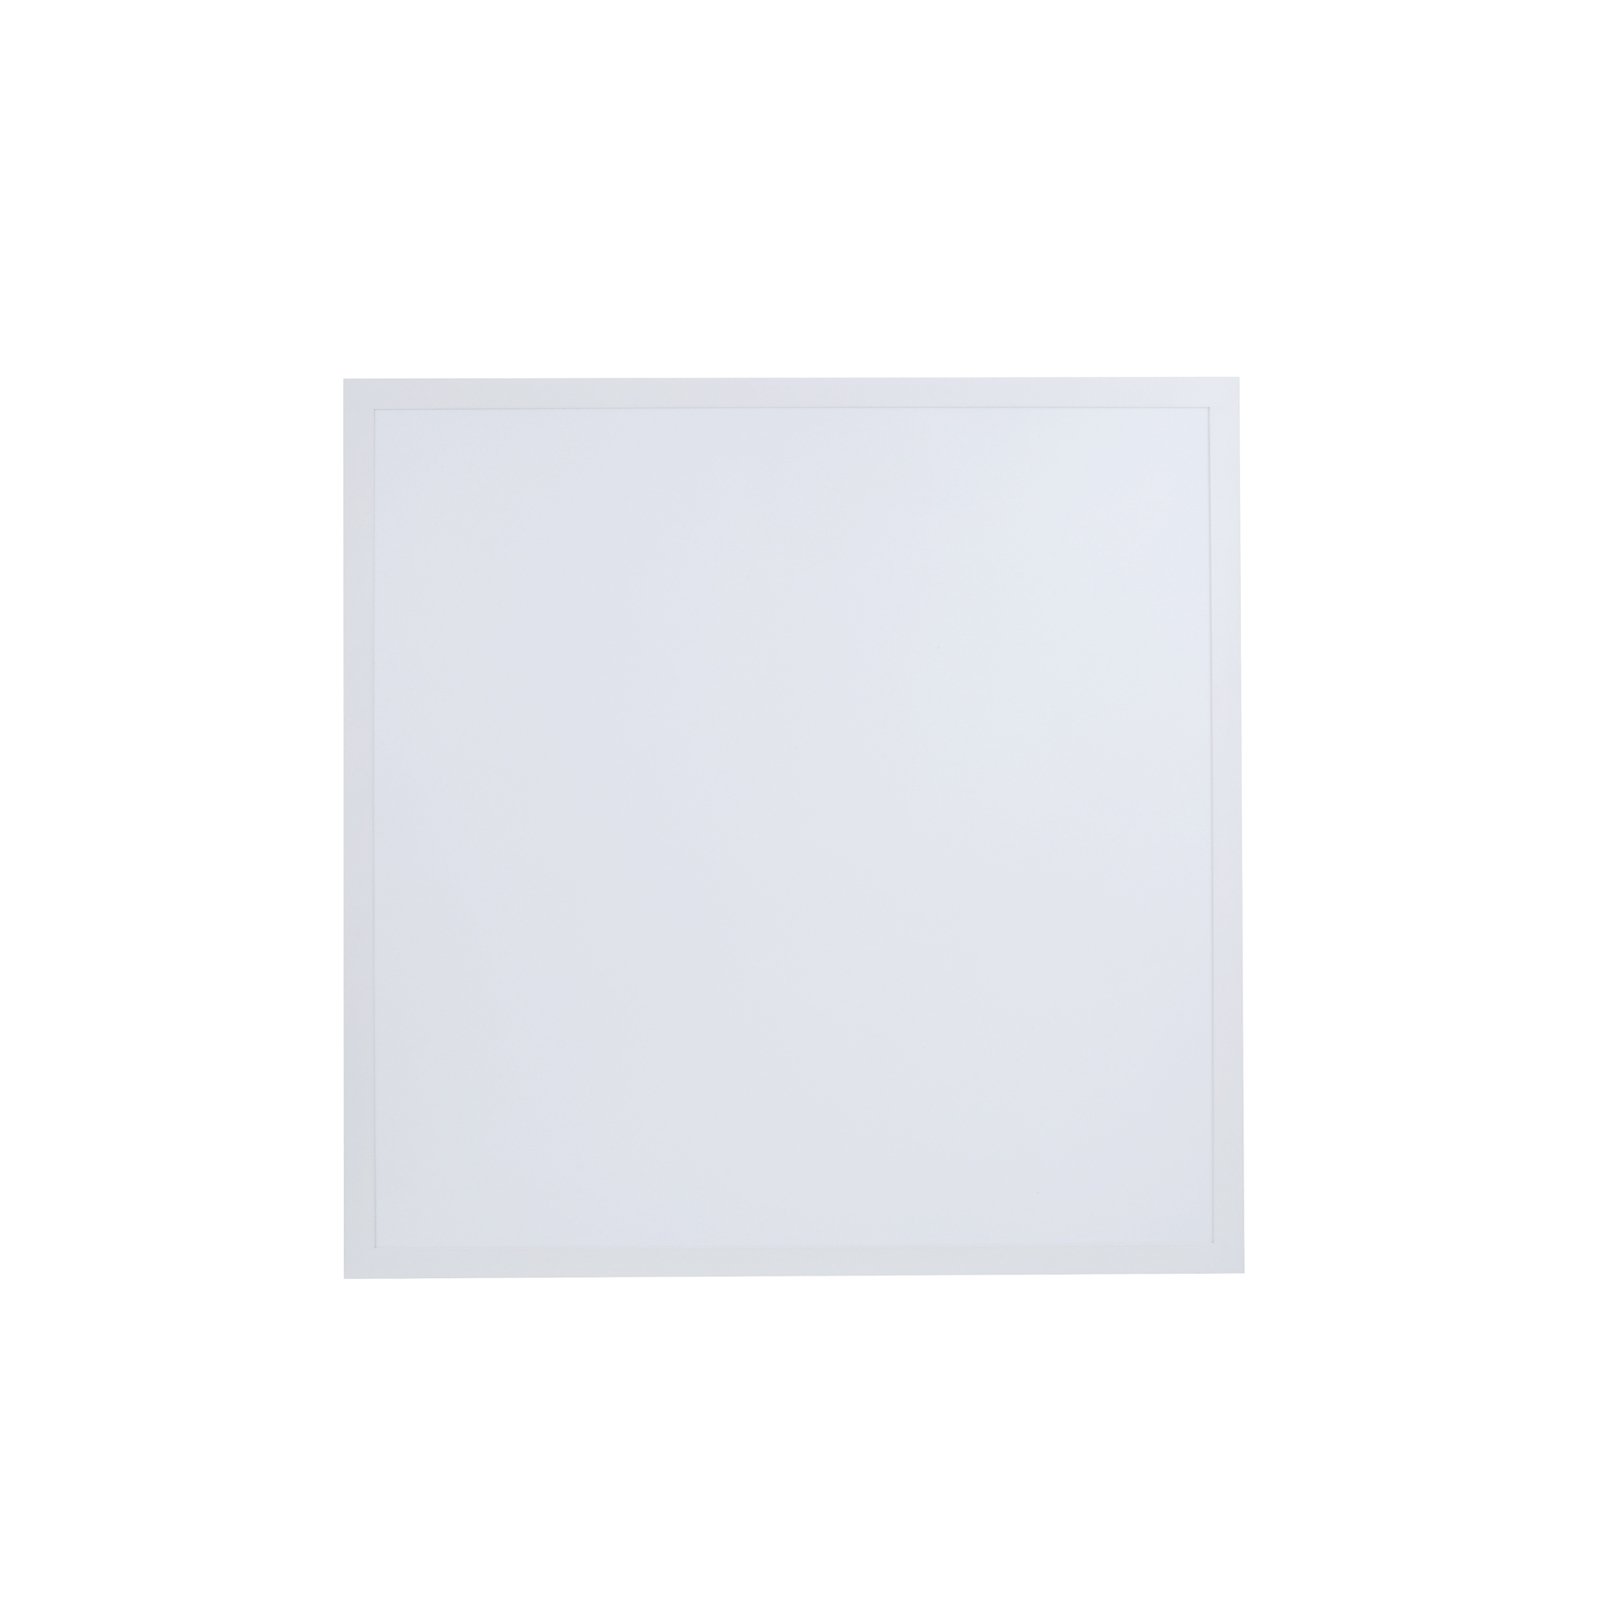 Sylvania LED-Panel Start, weiß, 62 x 62 cm, 30 W, UGR19, 830